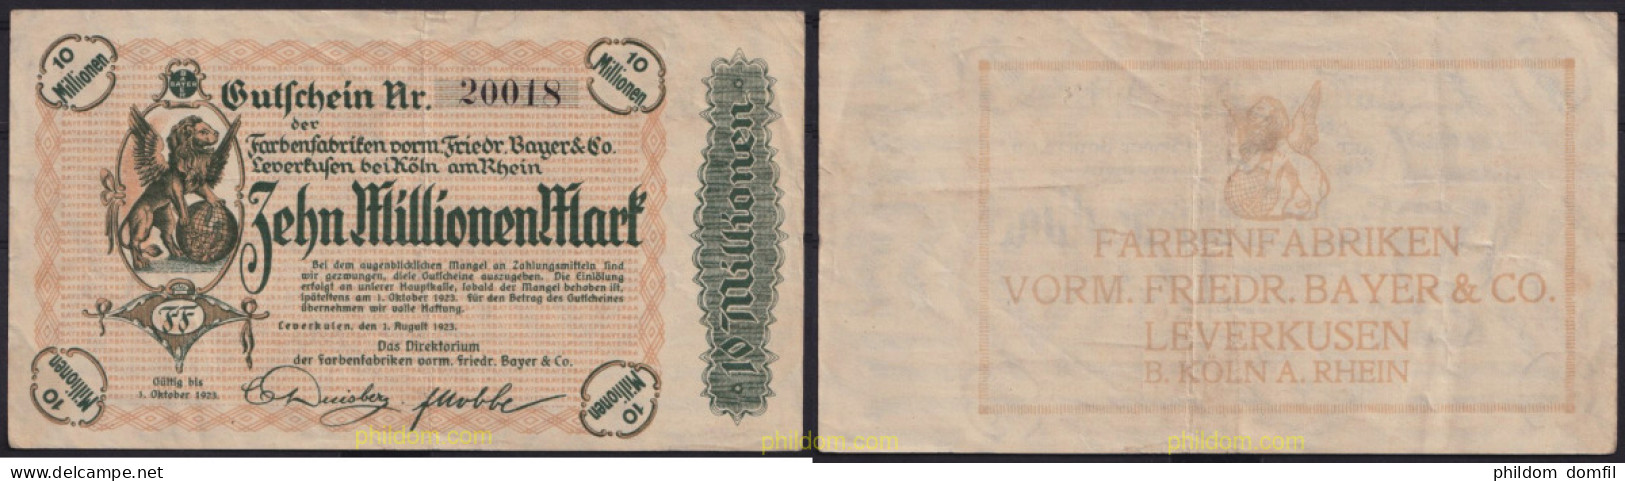 3671 ALEMANIA 1923 GERMANY 10000000 MARK 1923 LEVERKUSEN FARBENFABRIKEN VORM FRIEDR. BAYER & CO - Bestuur Voor Schulden